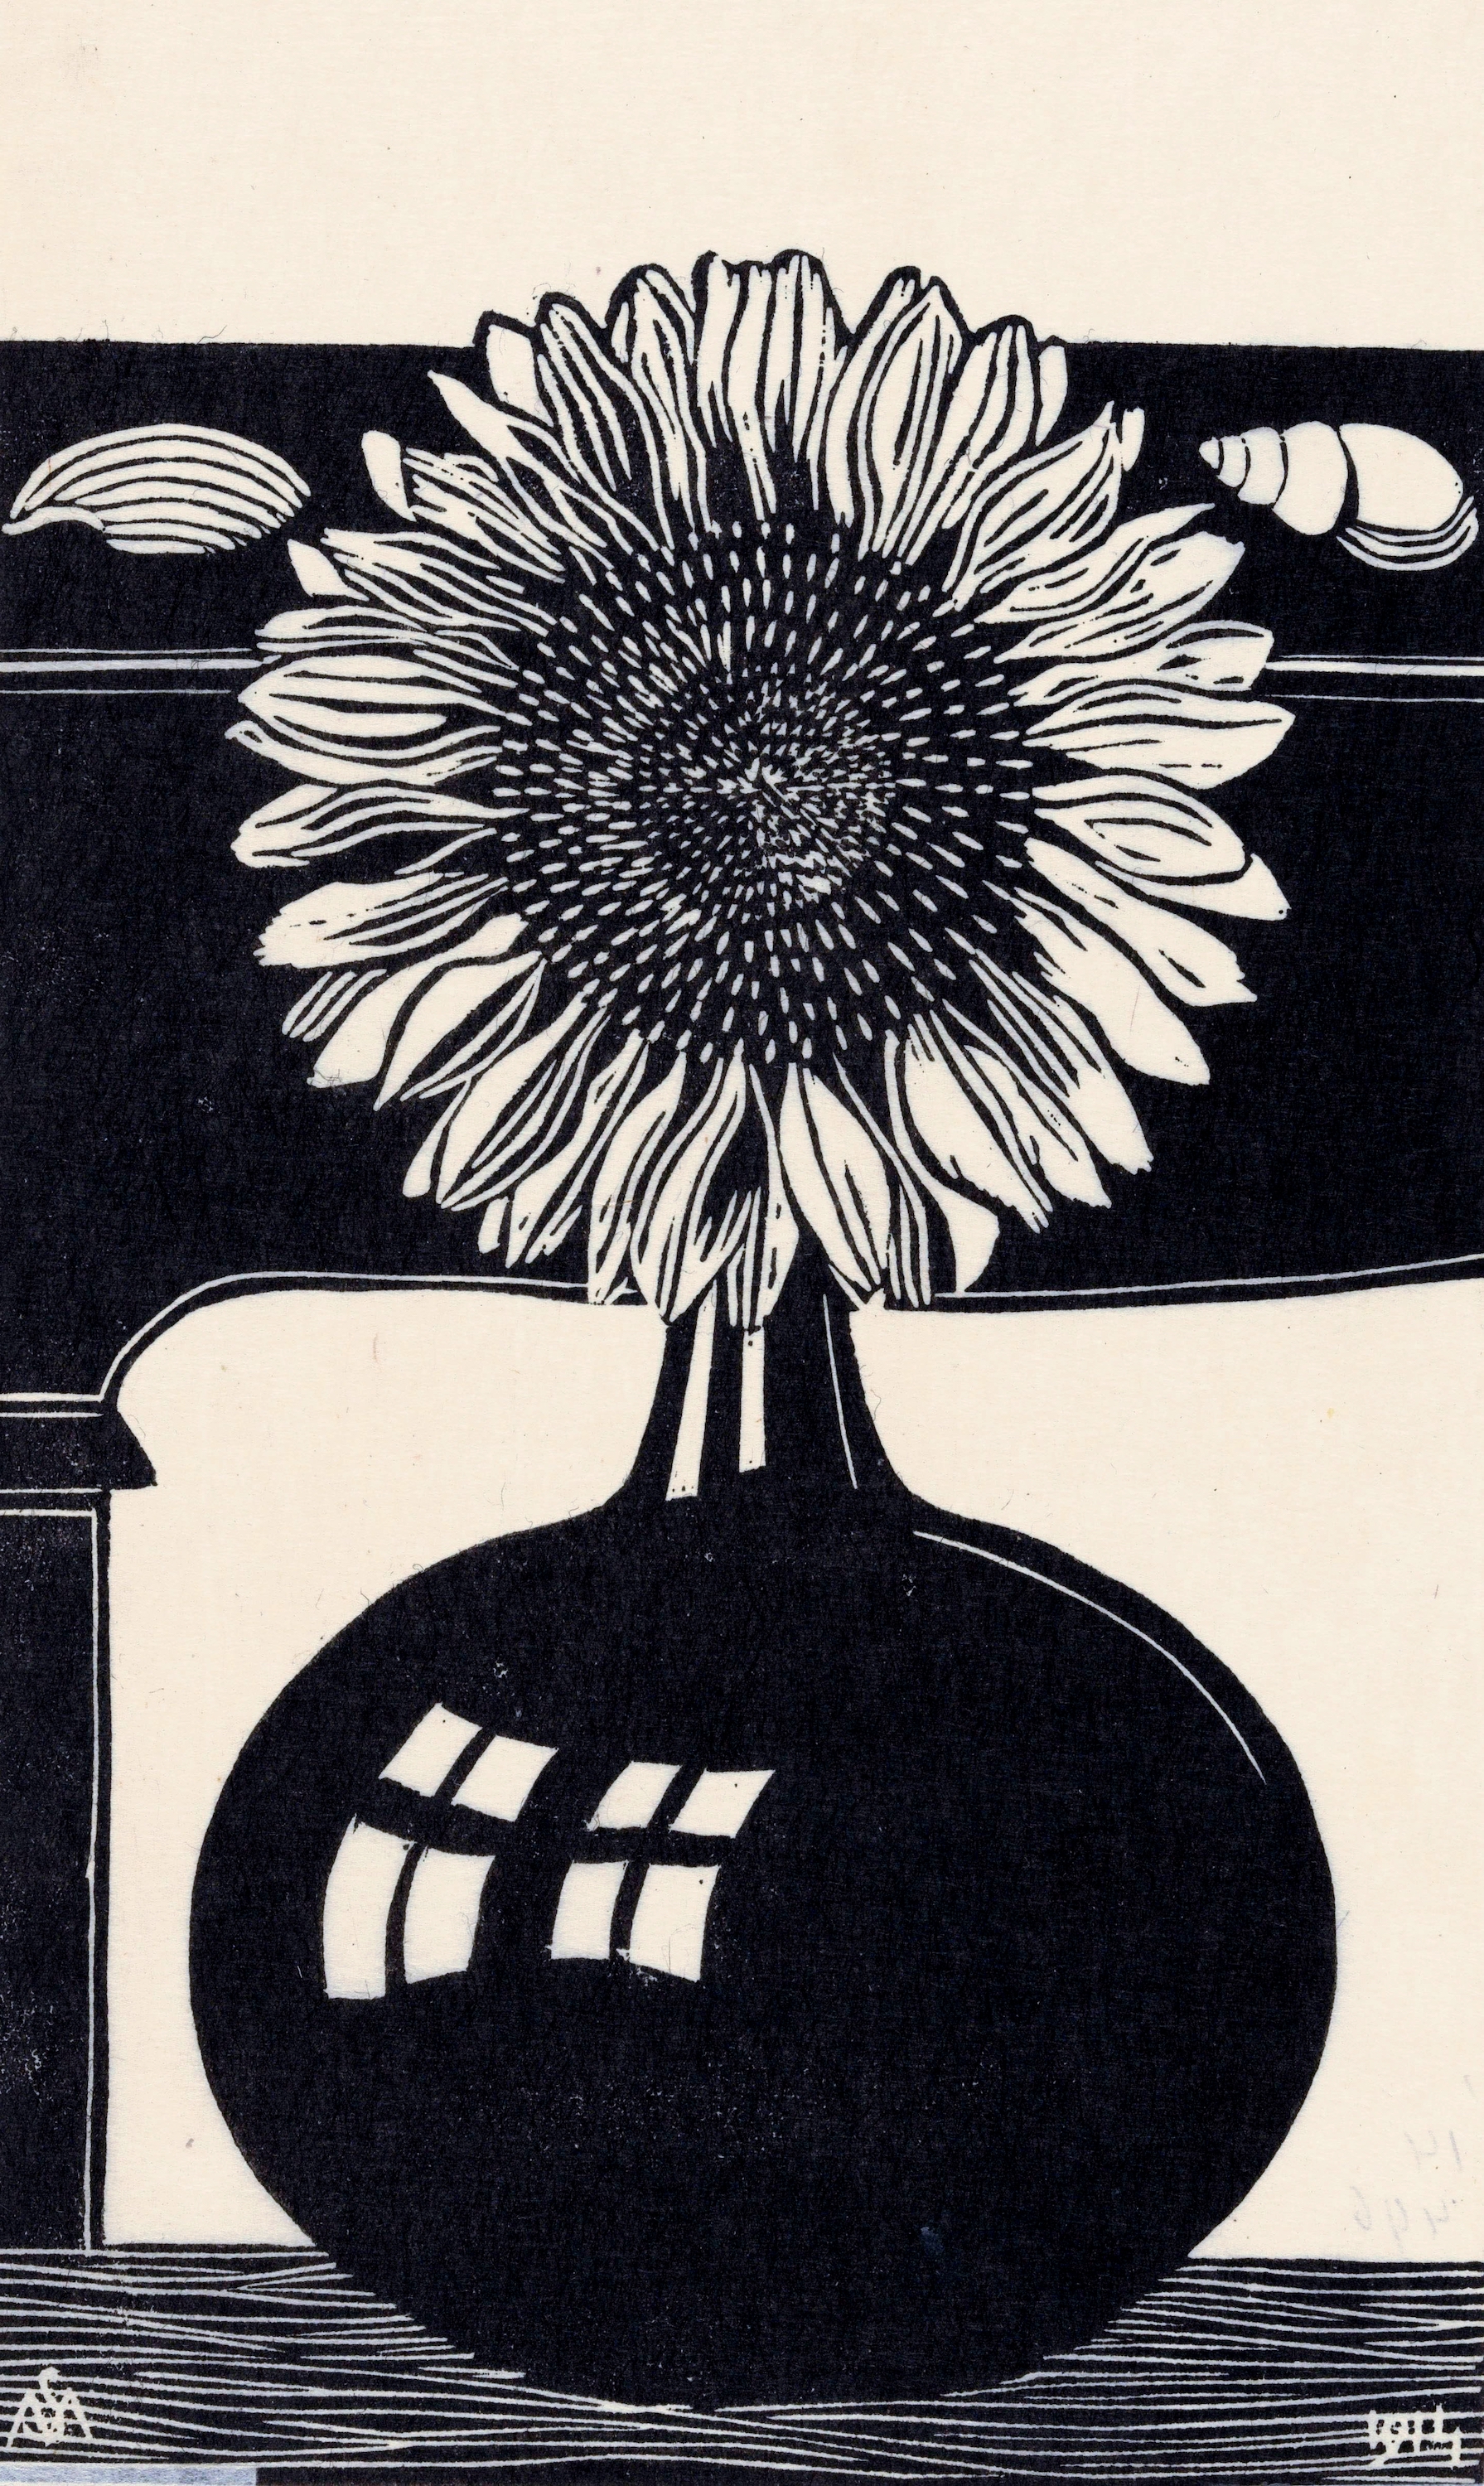 The Sunflower by Samuel Jessurun de Mesquita - 1914 - 29.9 x 19.5 cm private collection